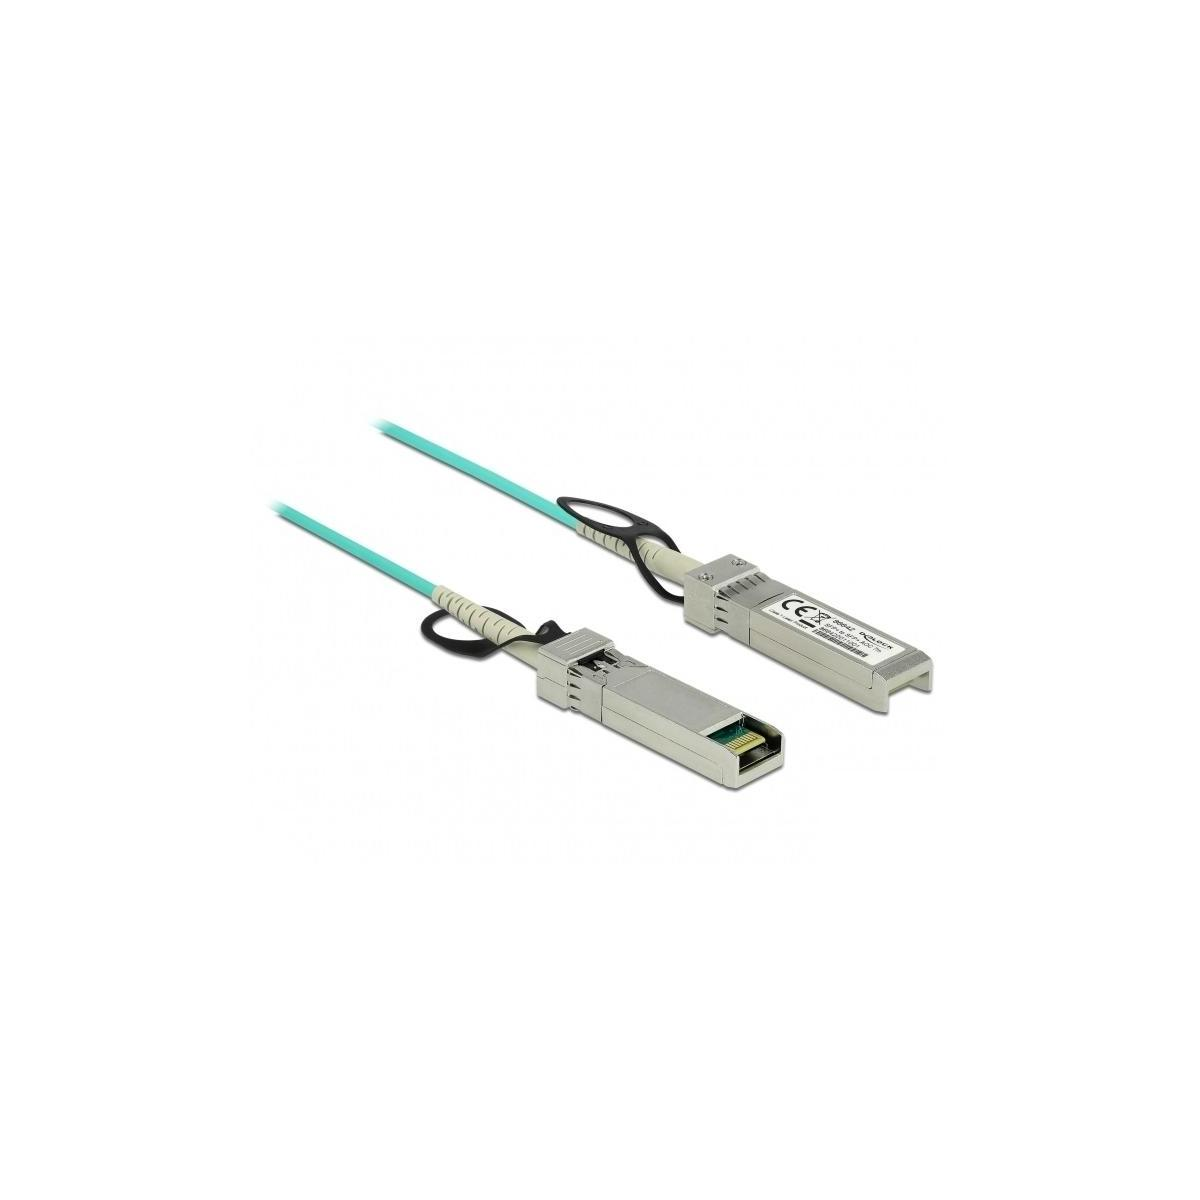 DELOCK 86642 SFP+ Direct Cable (AOC), Türkis Attachment Active